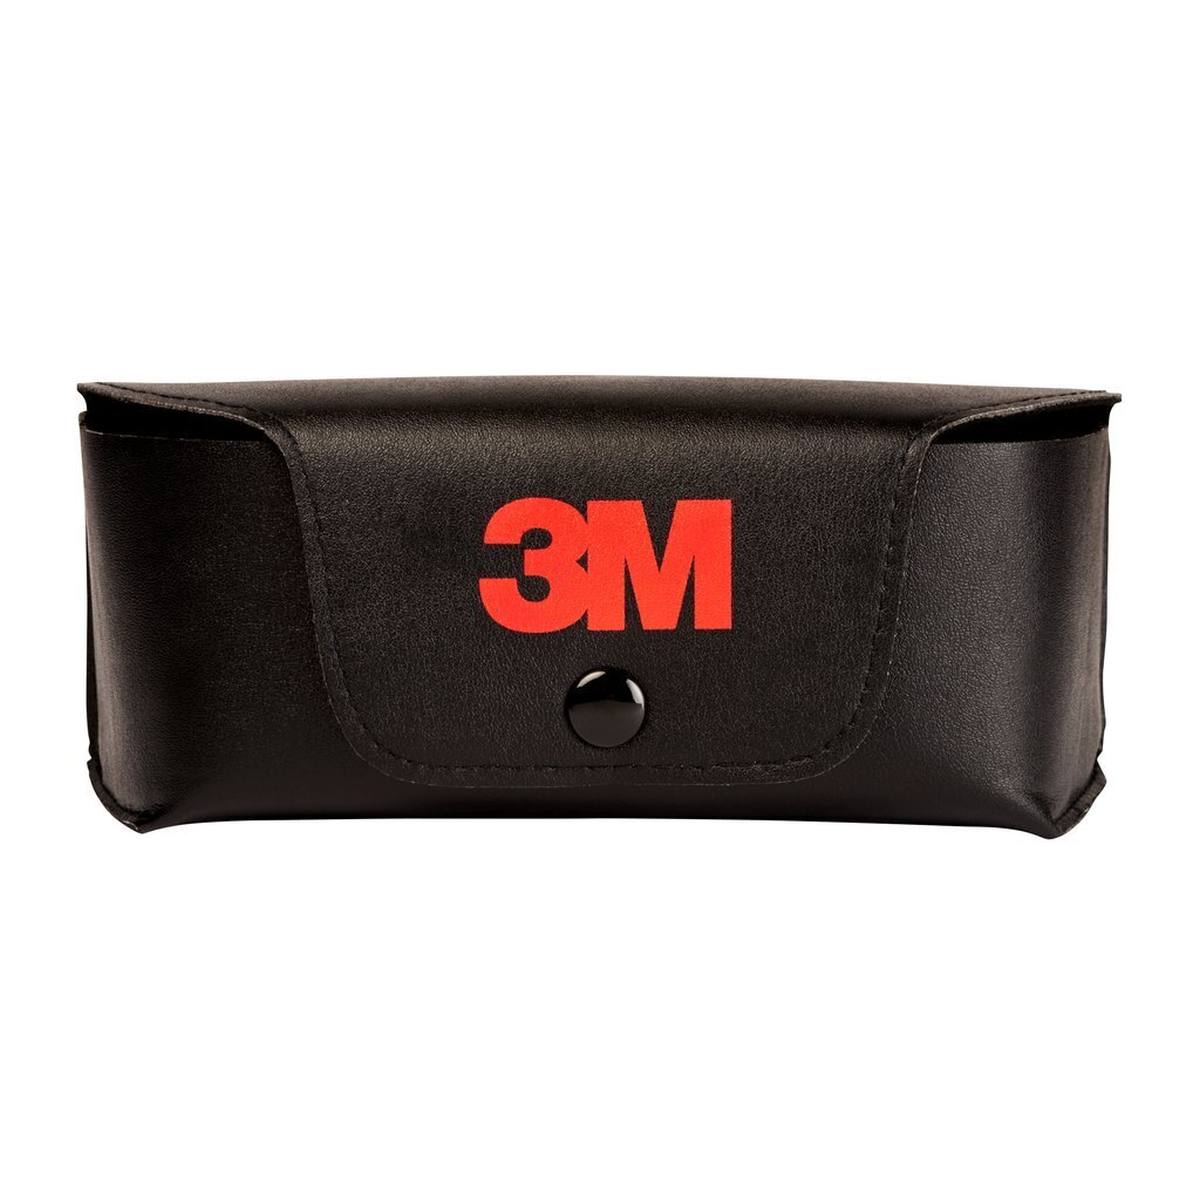 3M Large glasses case with strap for the belt, black, case1